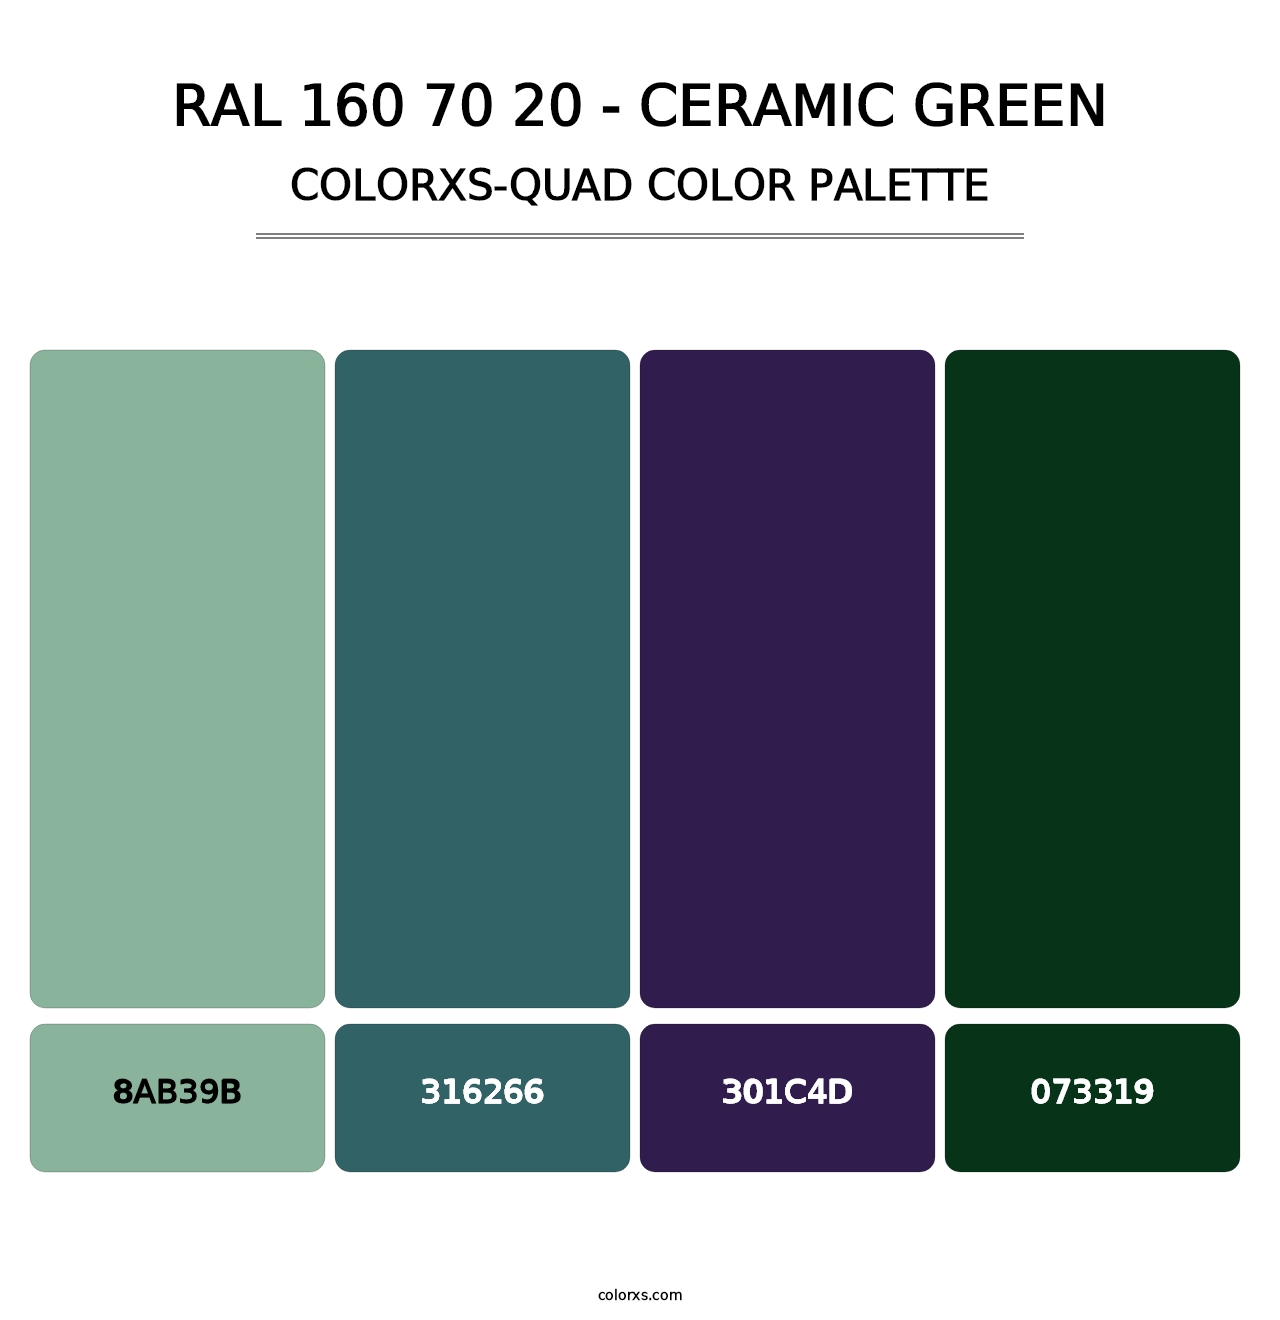 RAL 160 70 20 - Ceramic Green - Colorxs Quad Palette